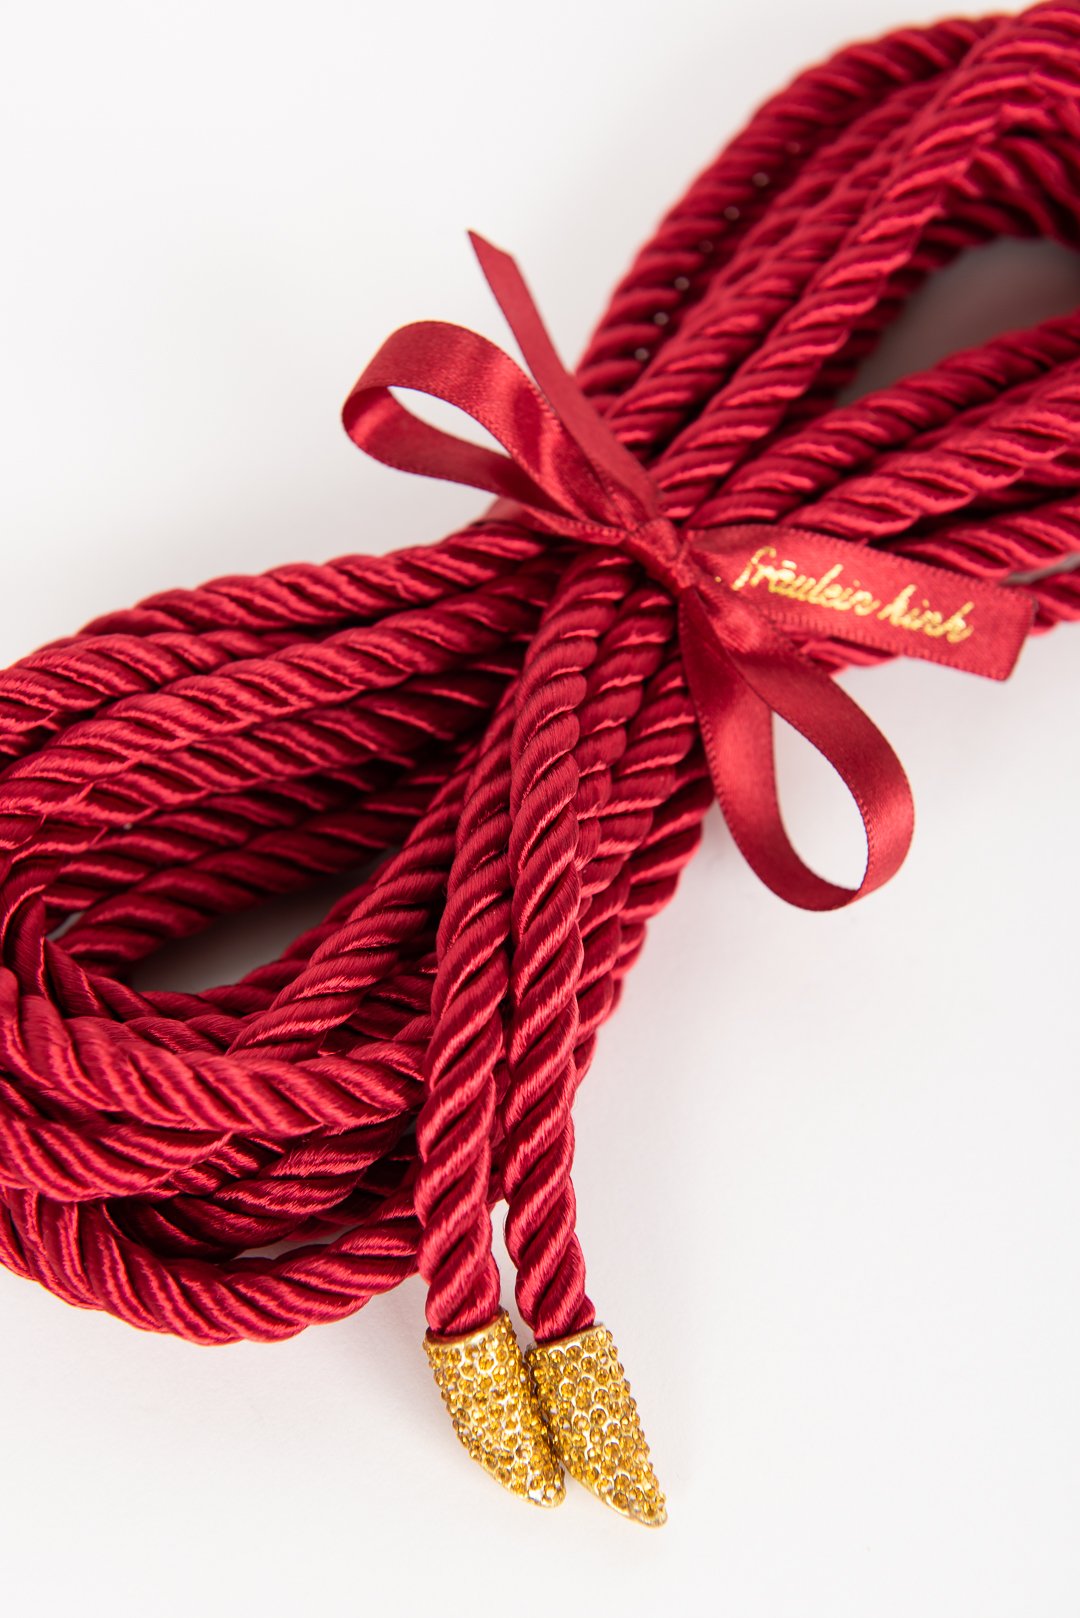 Luxury Lasso Bondage Rope With Crystal Tip buy online at Fraulein Kink